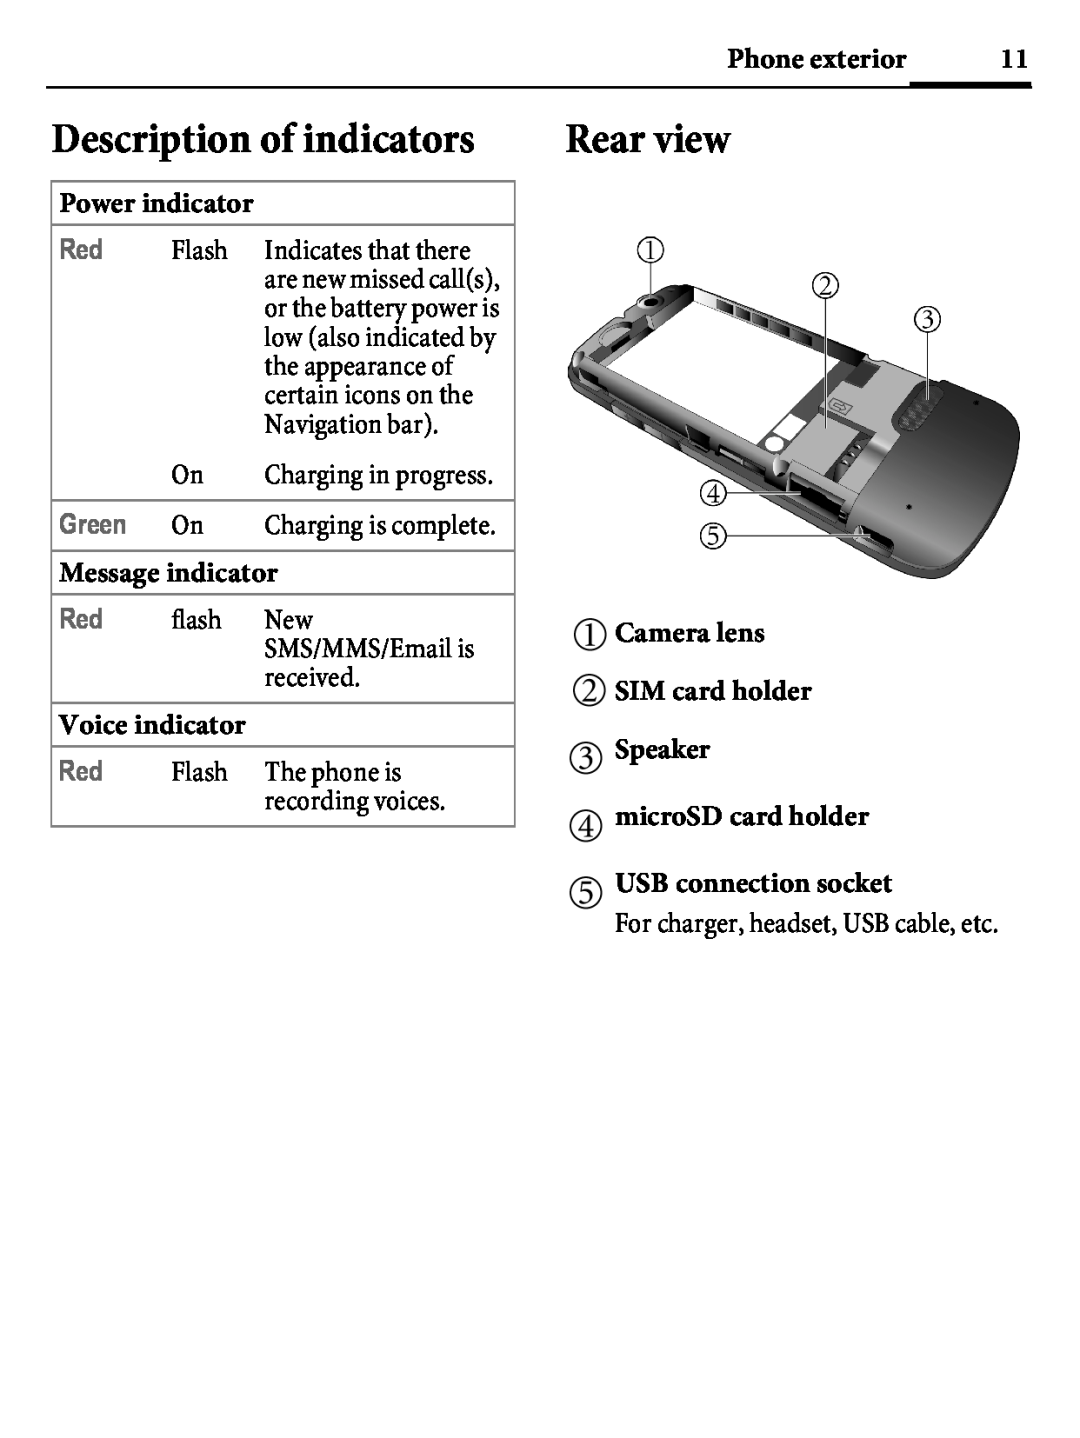 Kyocera E4000 Description of indicators, Rear view, Power indicator, Green, Message indicator, USB connection socket 